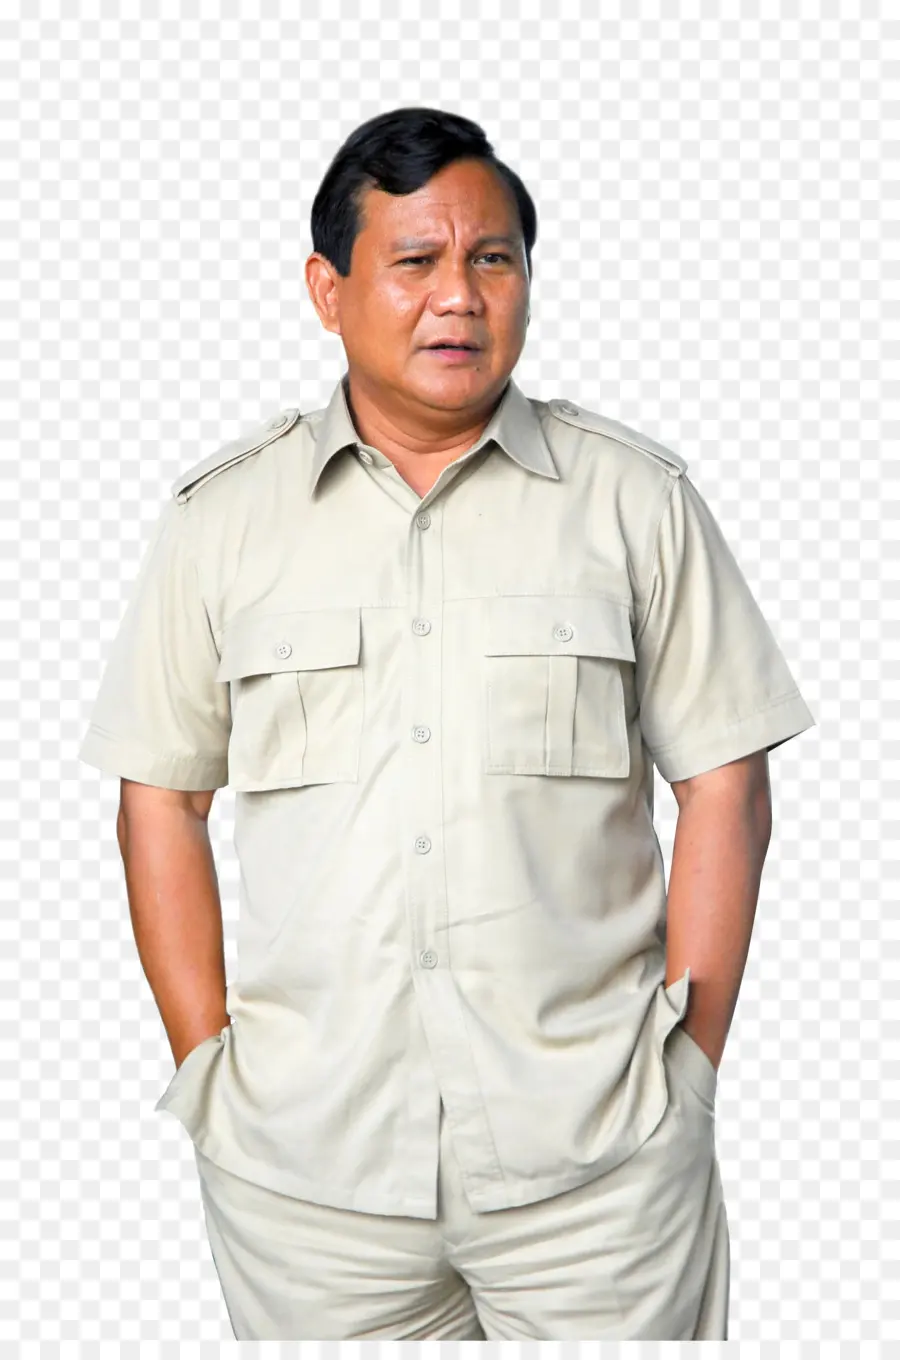 прабово субианто，индонезийский президентских выборах 2014 года PNG